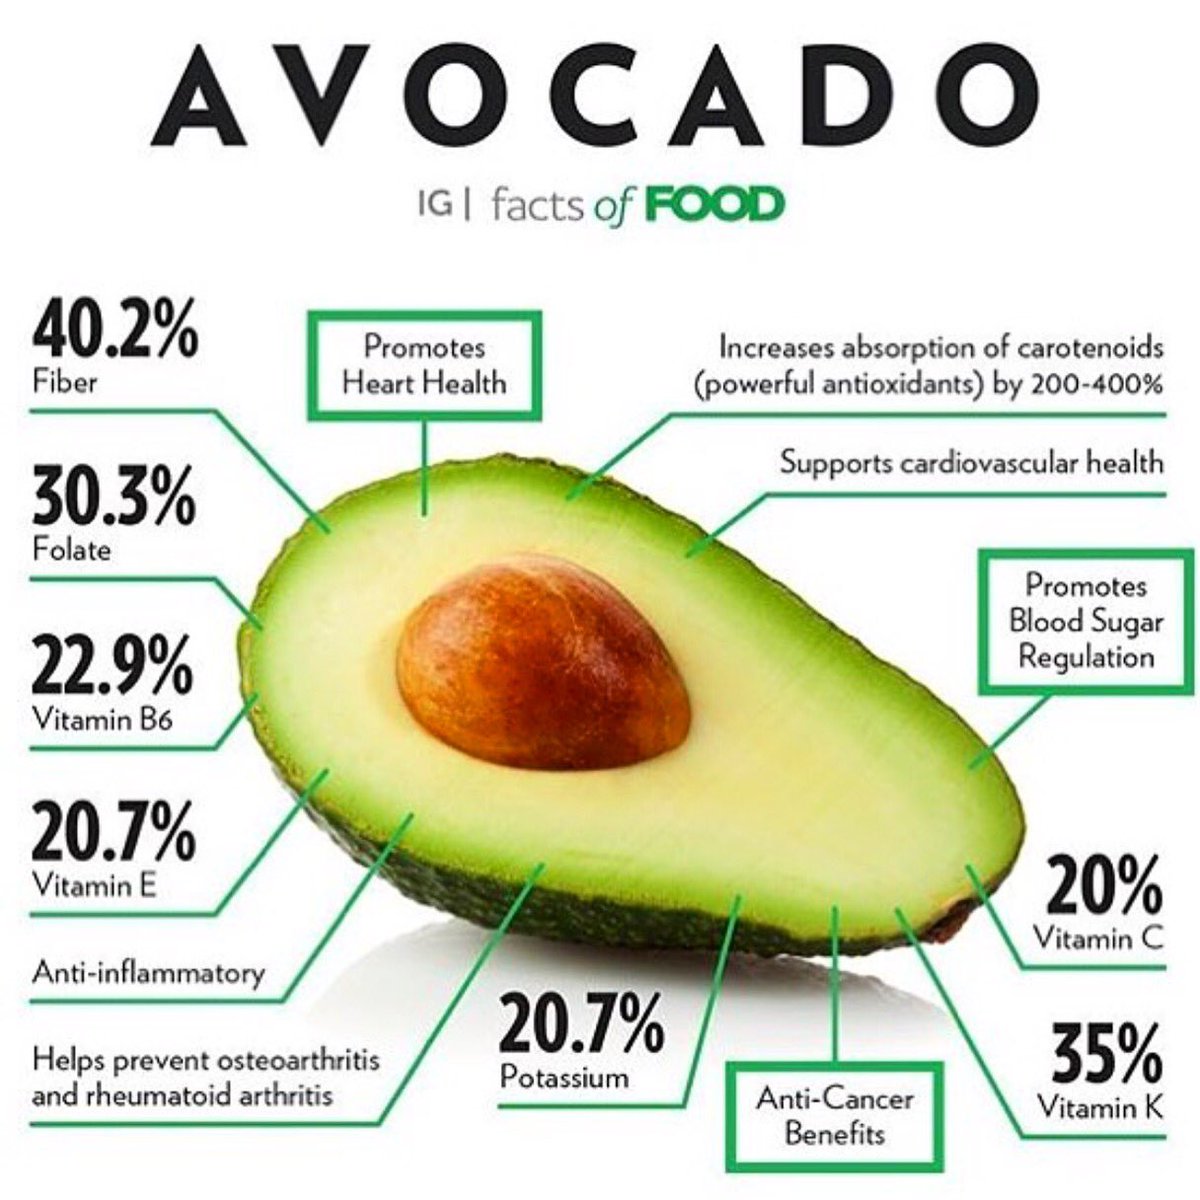 Avocado facts. Did you know? #avocados #avocadofacts #itsfresh itsfresh.com